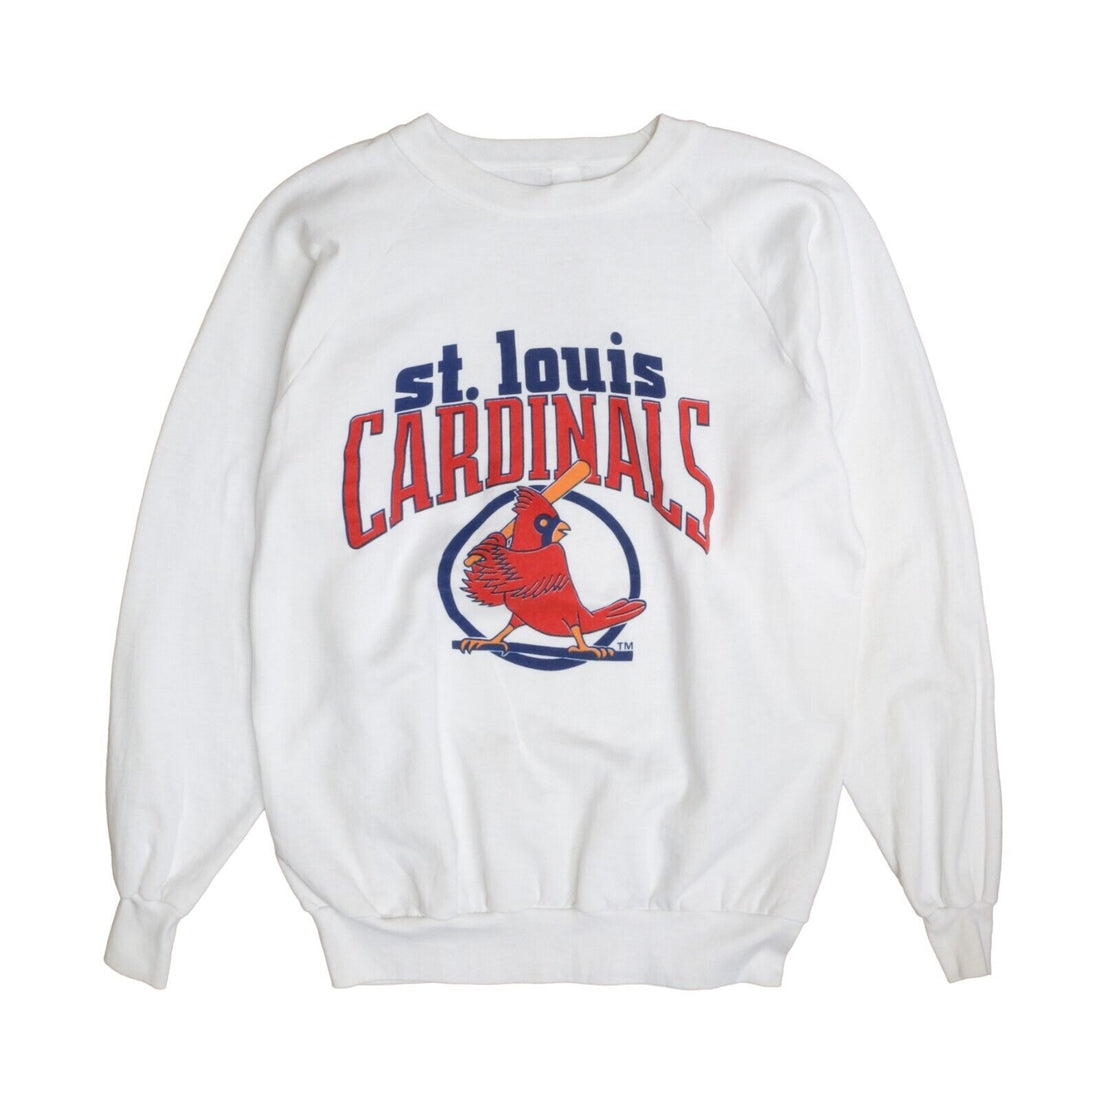 Vintage St Louis Cardinals Sweatshirt Crewneck Size Medium White 90s MLB